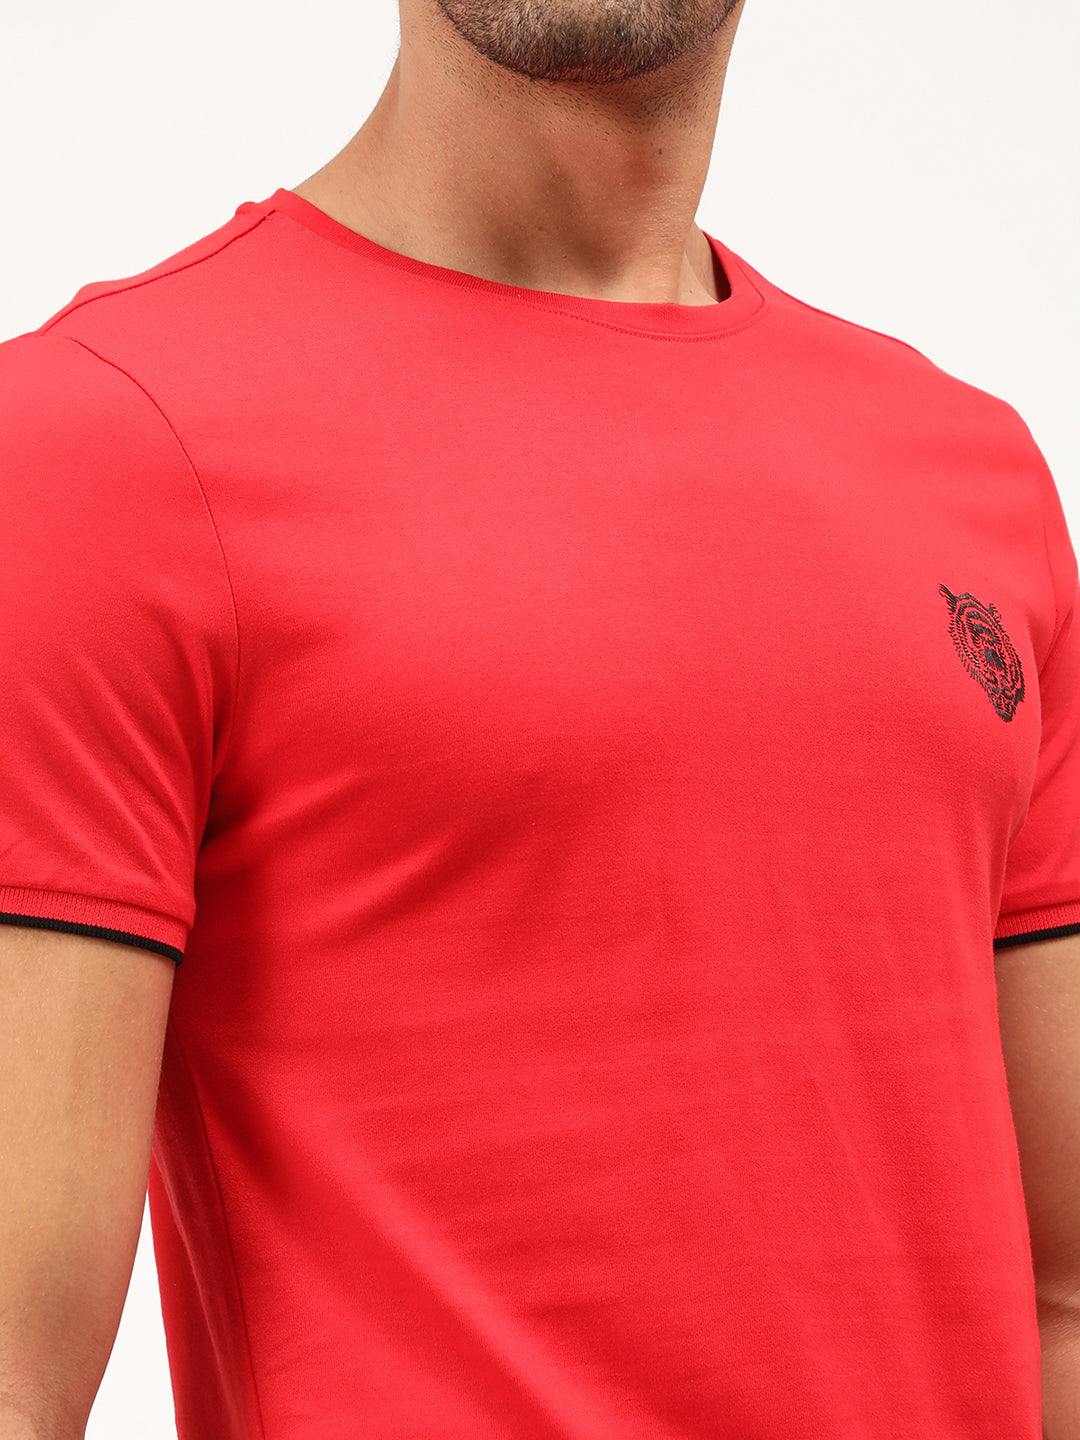 Antony Morato Men Red Cotton Solid Slim Fit T-shirt